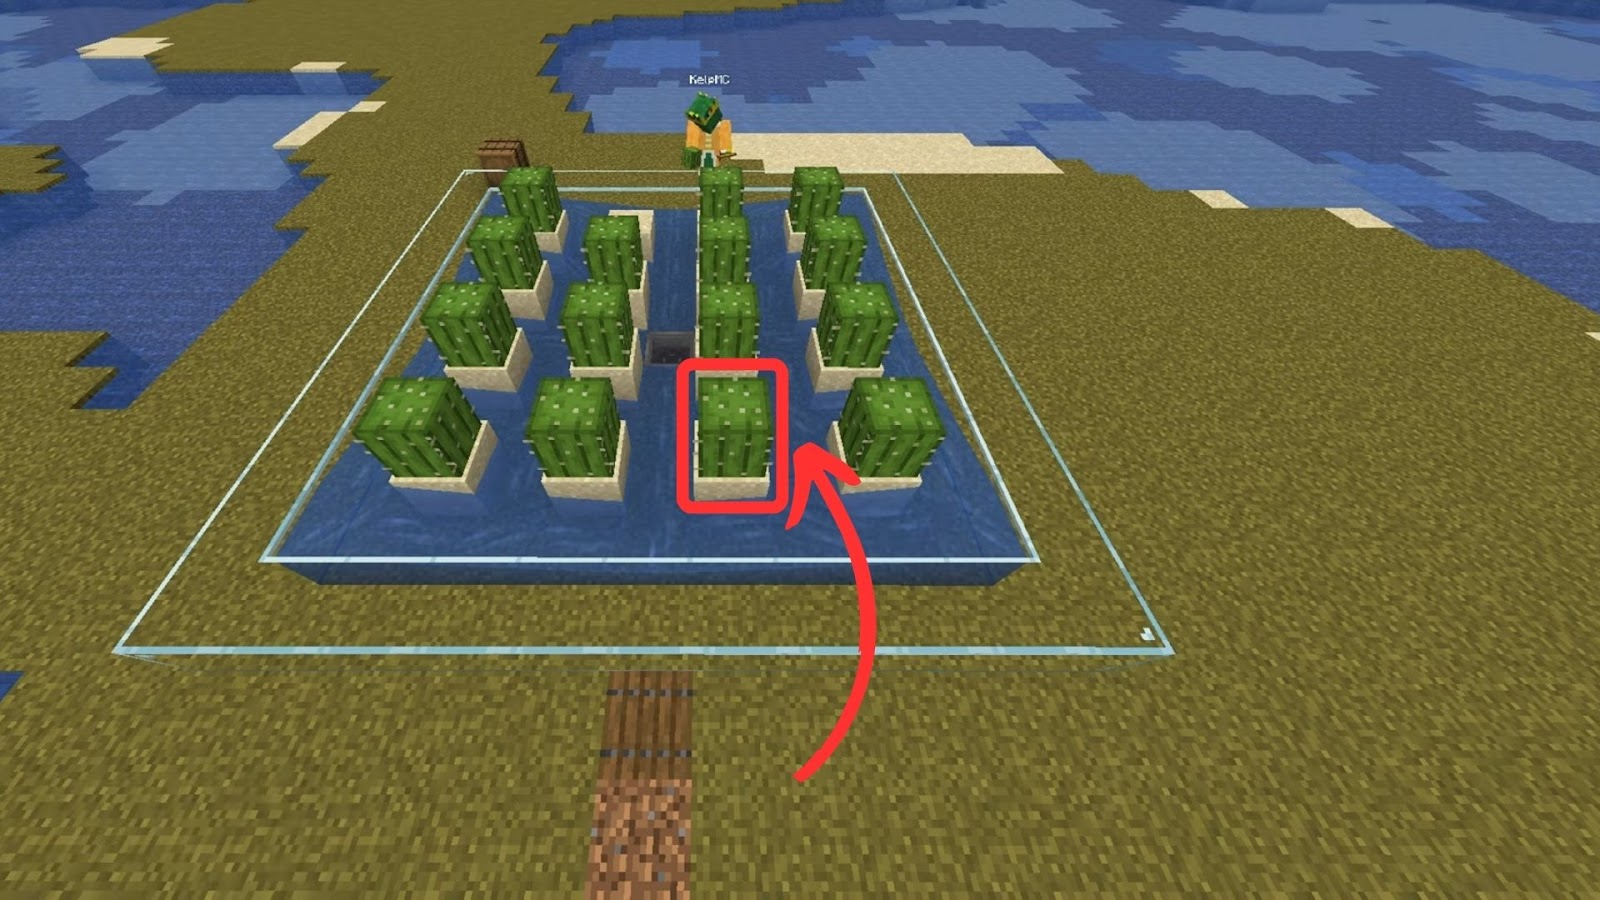 Grow Cactus in Minecraft Plant Cactus on Sand Blocks